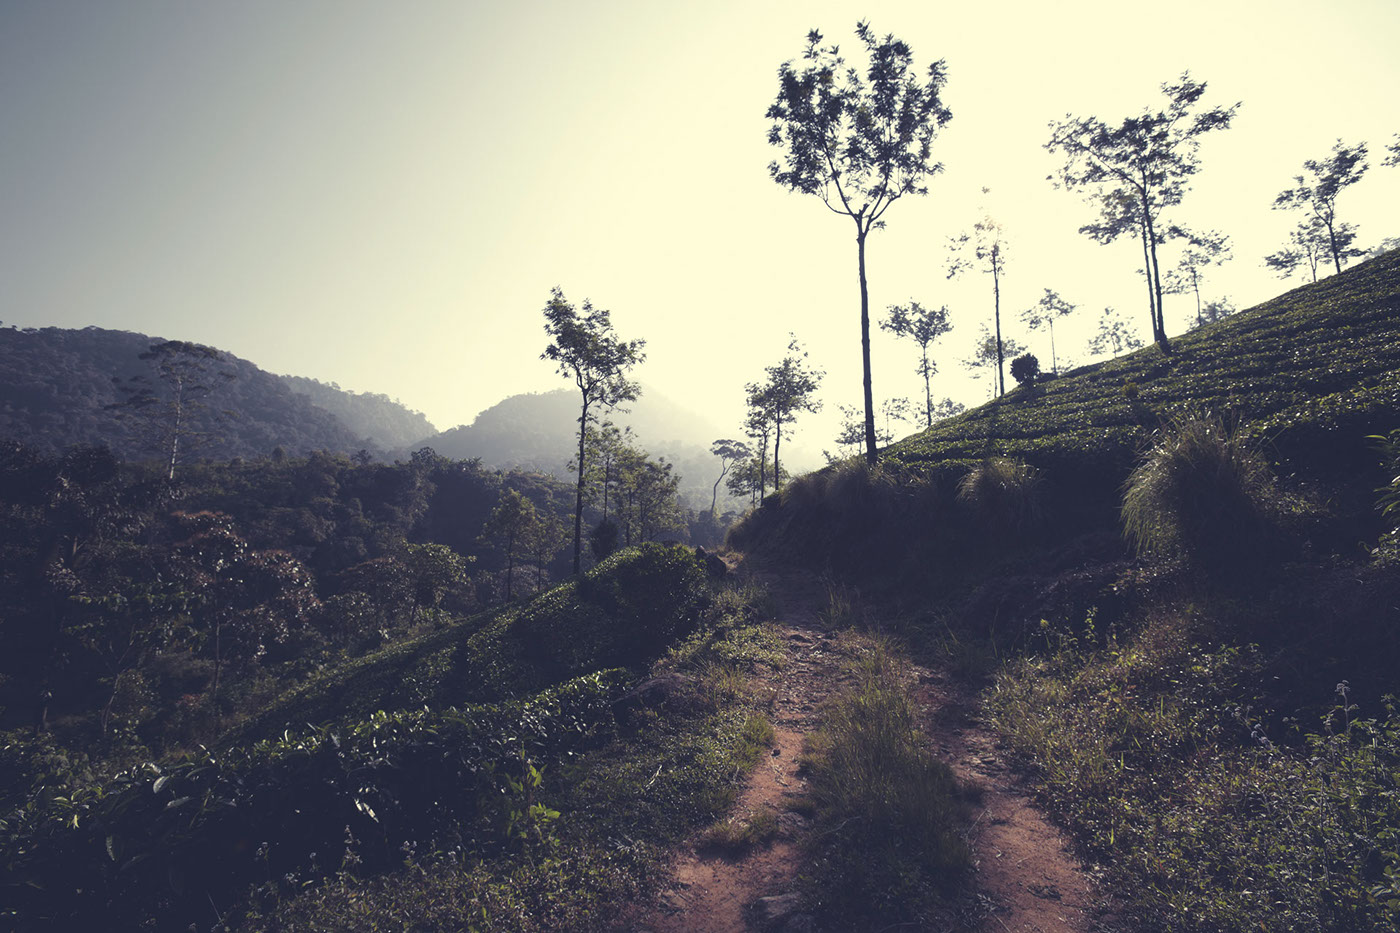 India tea landscapes black tea growing hills nutrition plants